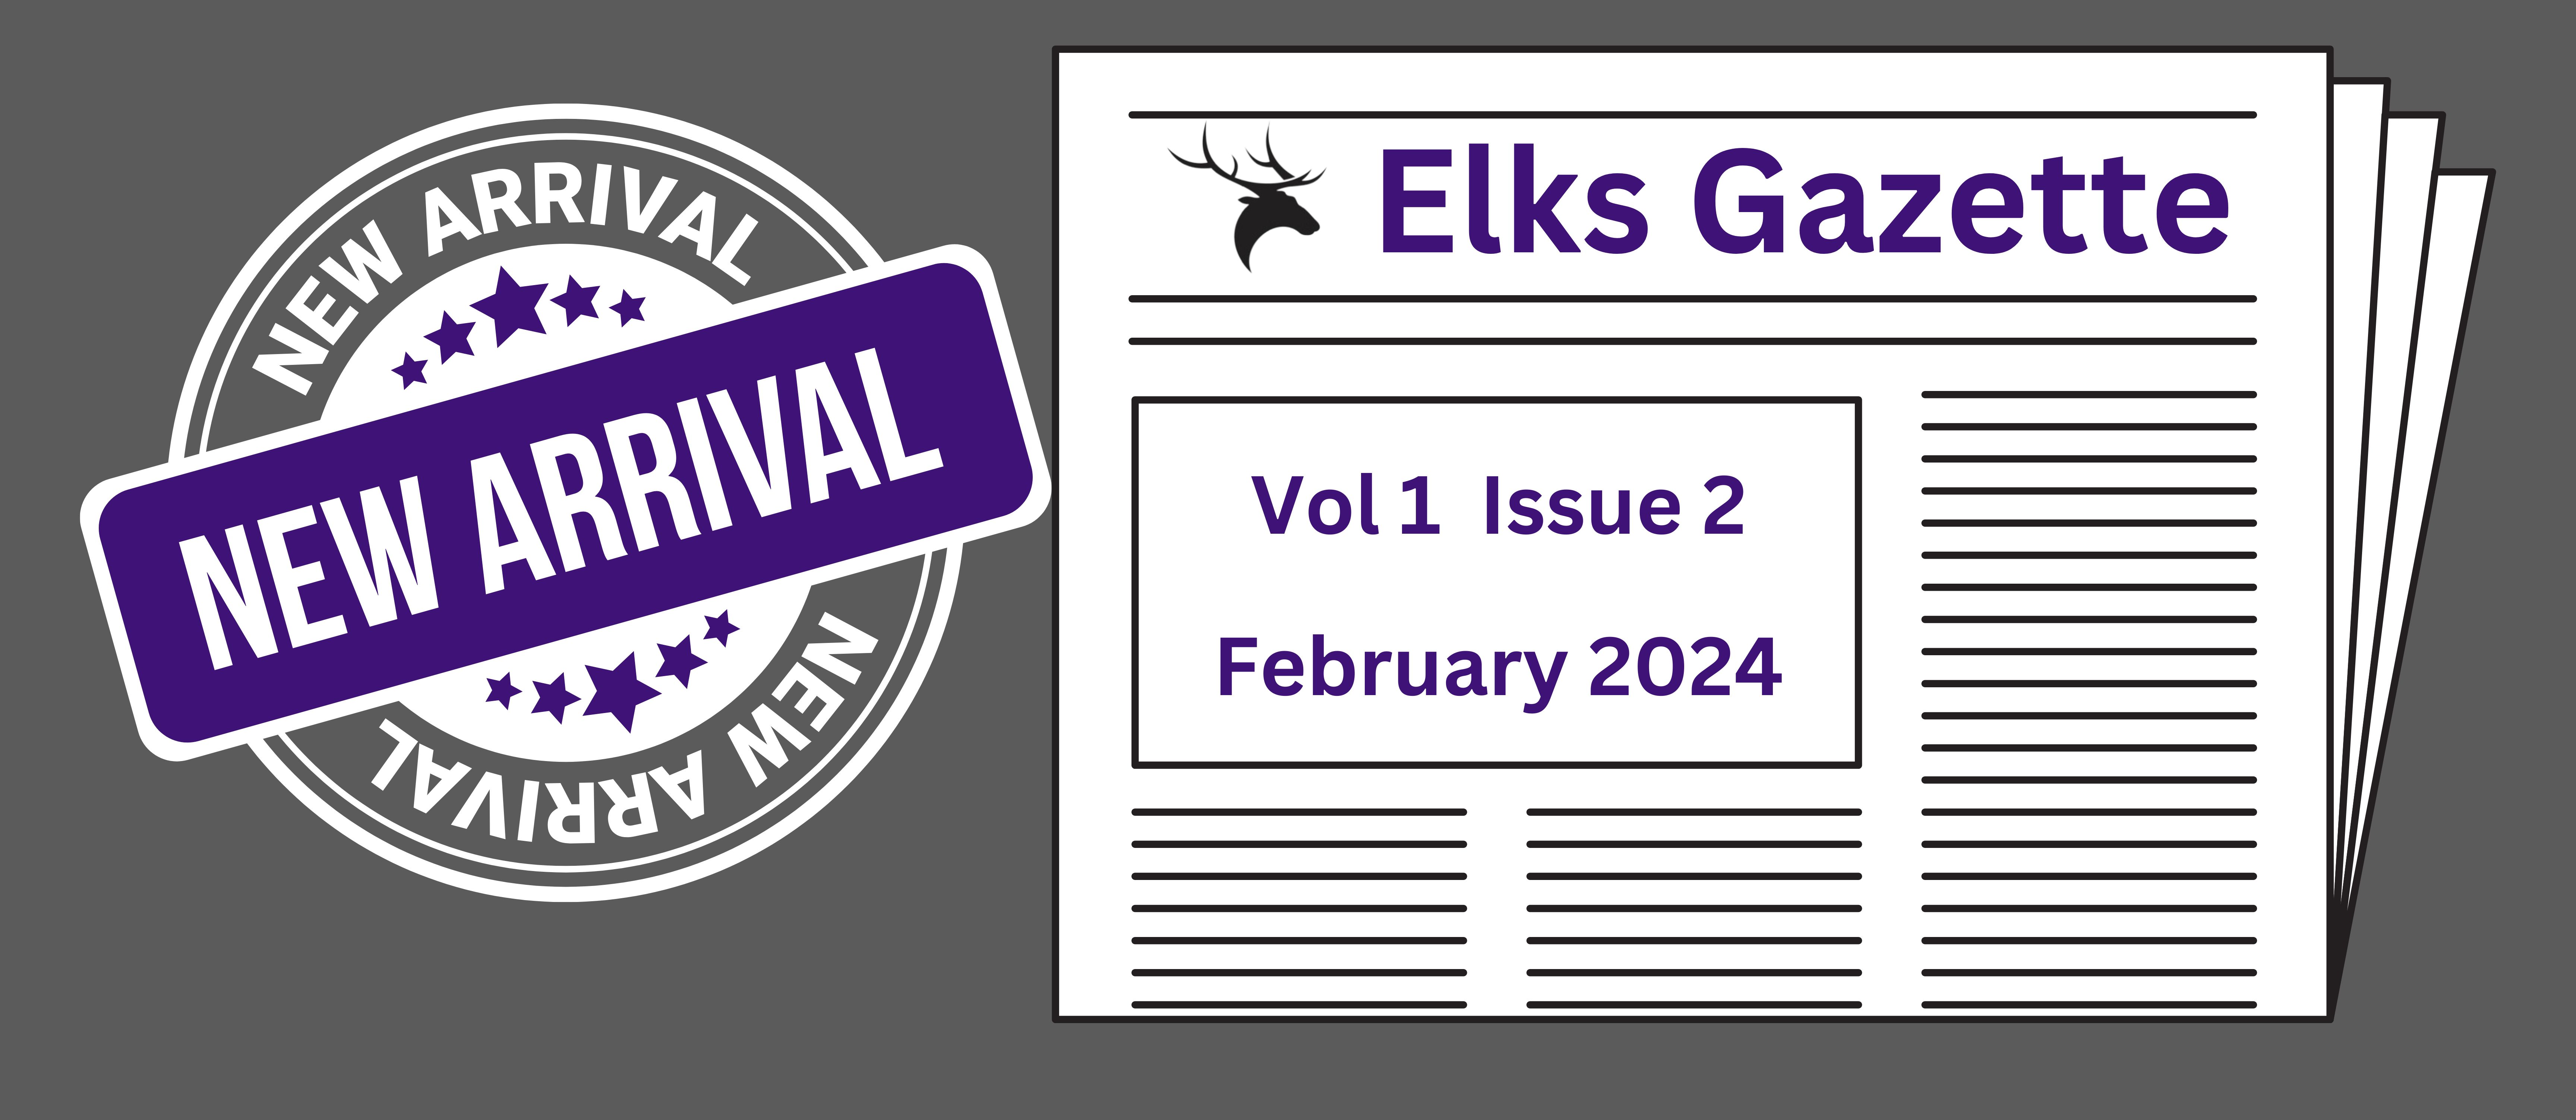 New Arrival! Elks Gazette Vol 1 Issue 2, February 2024